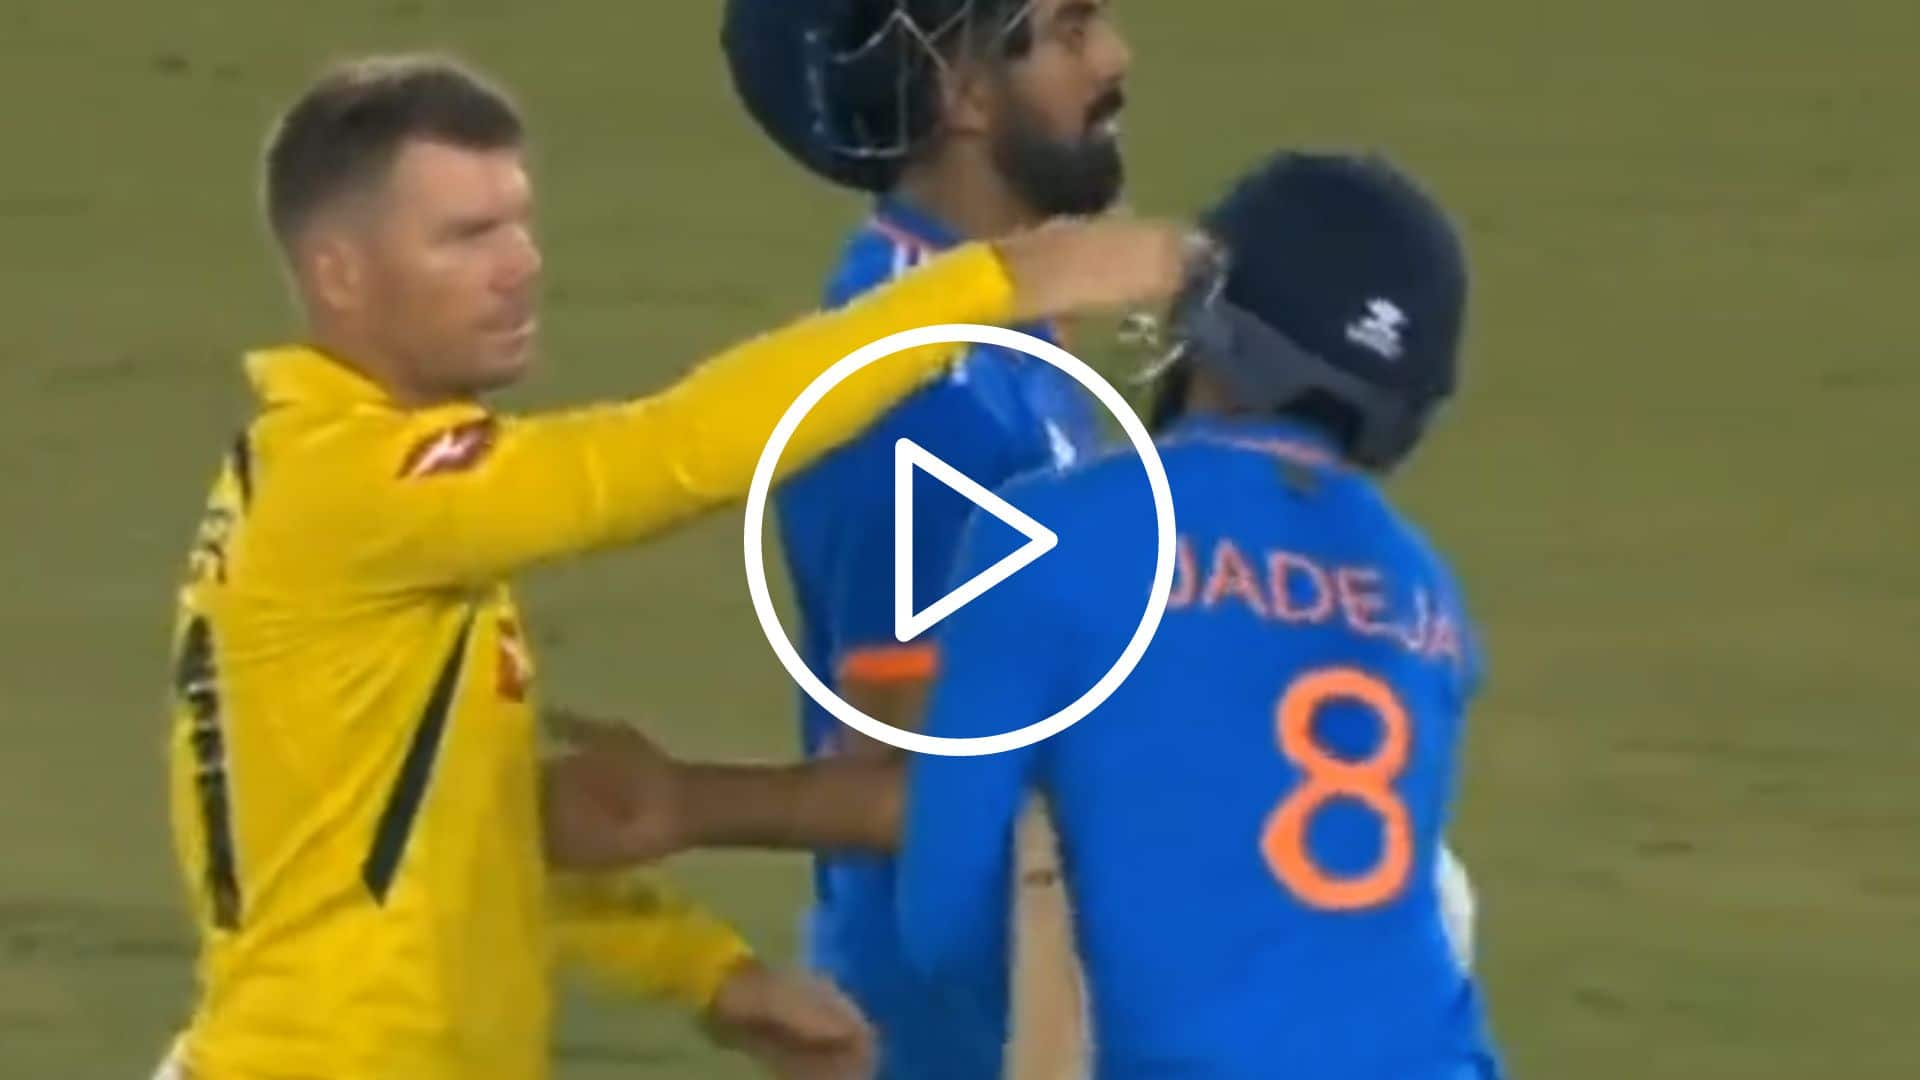 [Watch] David Warner Slaps Ravindra Jadeja After IND vs AUS 1st ODI